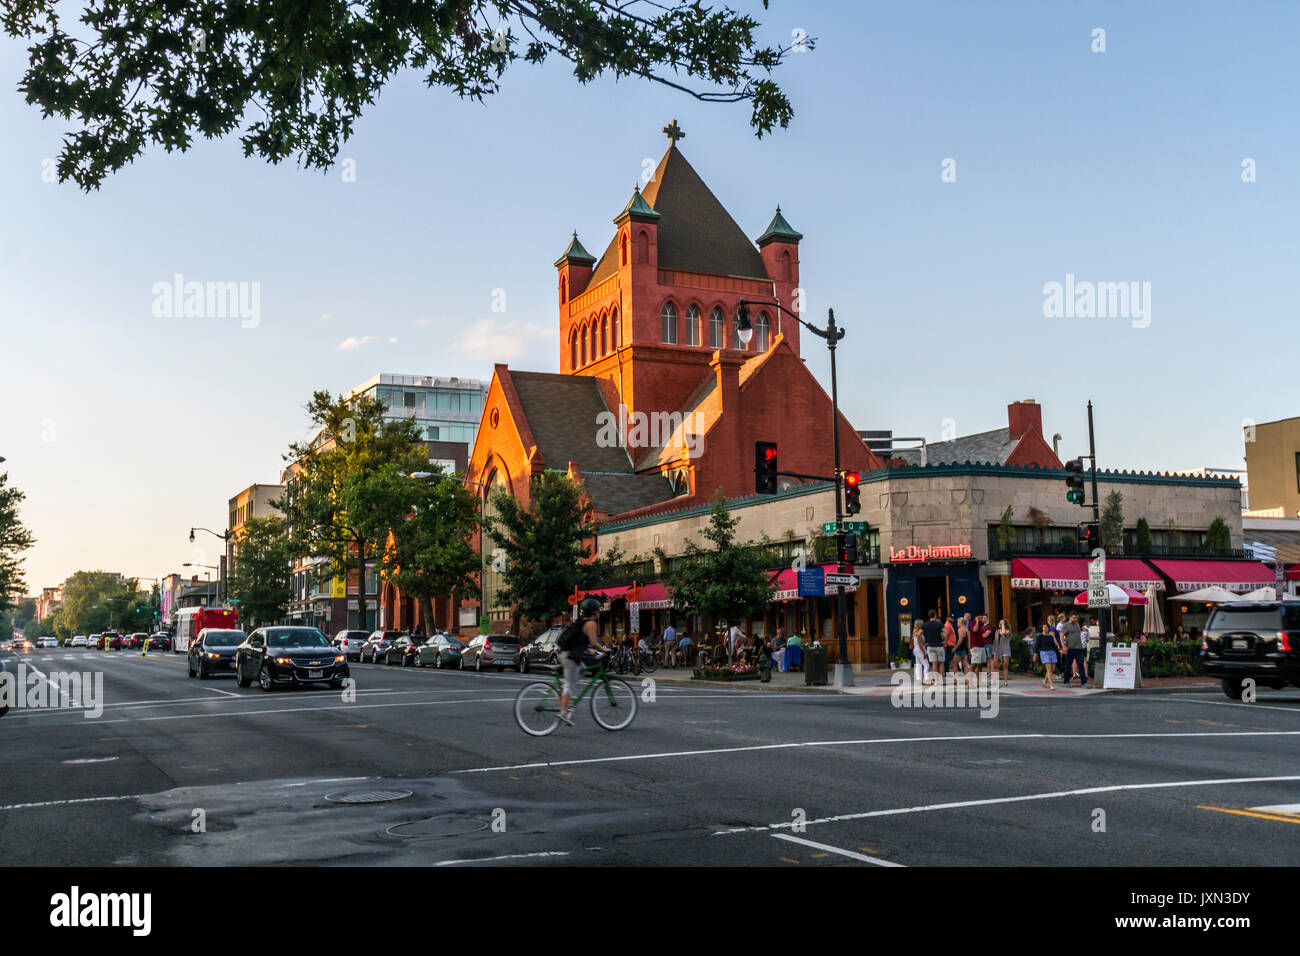 Typical Street Scene in Washington D.C.'s Restaurant Row, 14th Street, July, 2017 Stock Photo